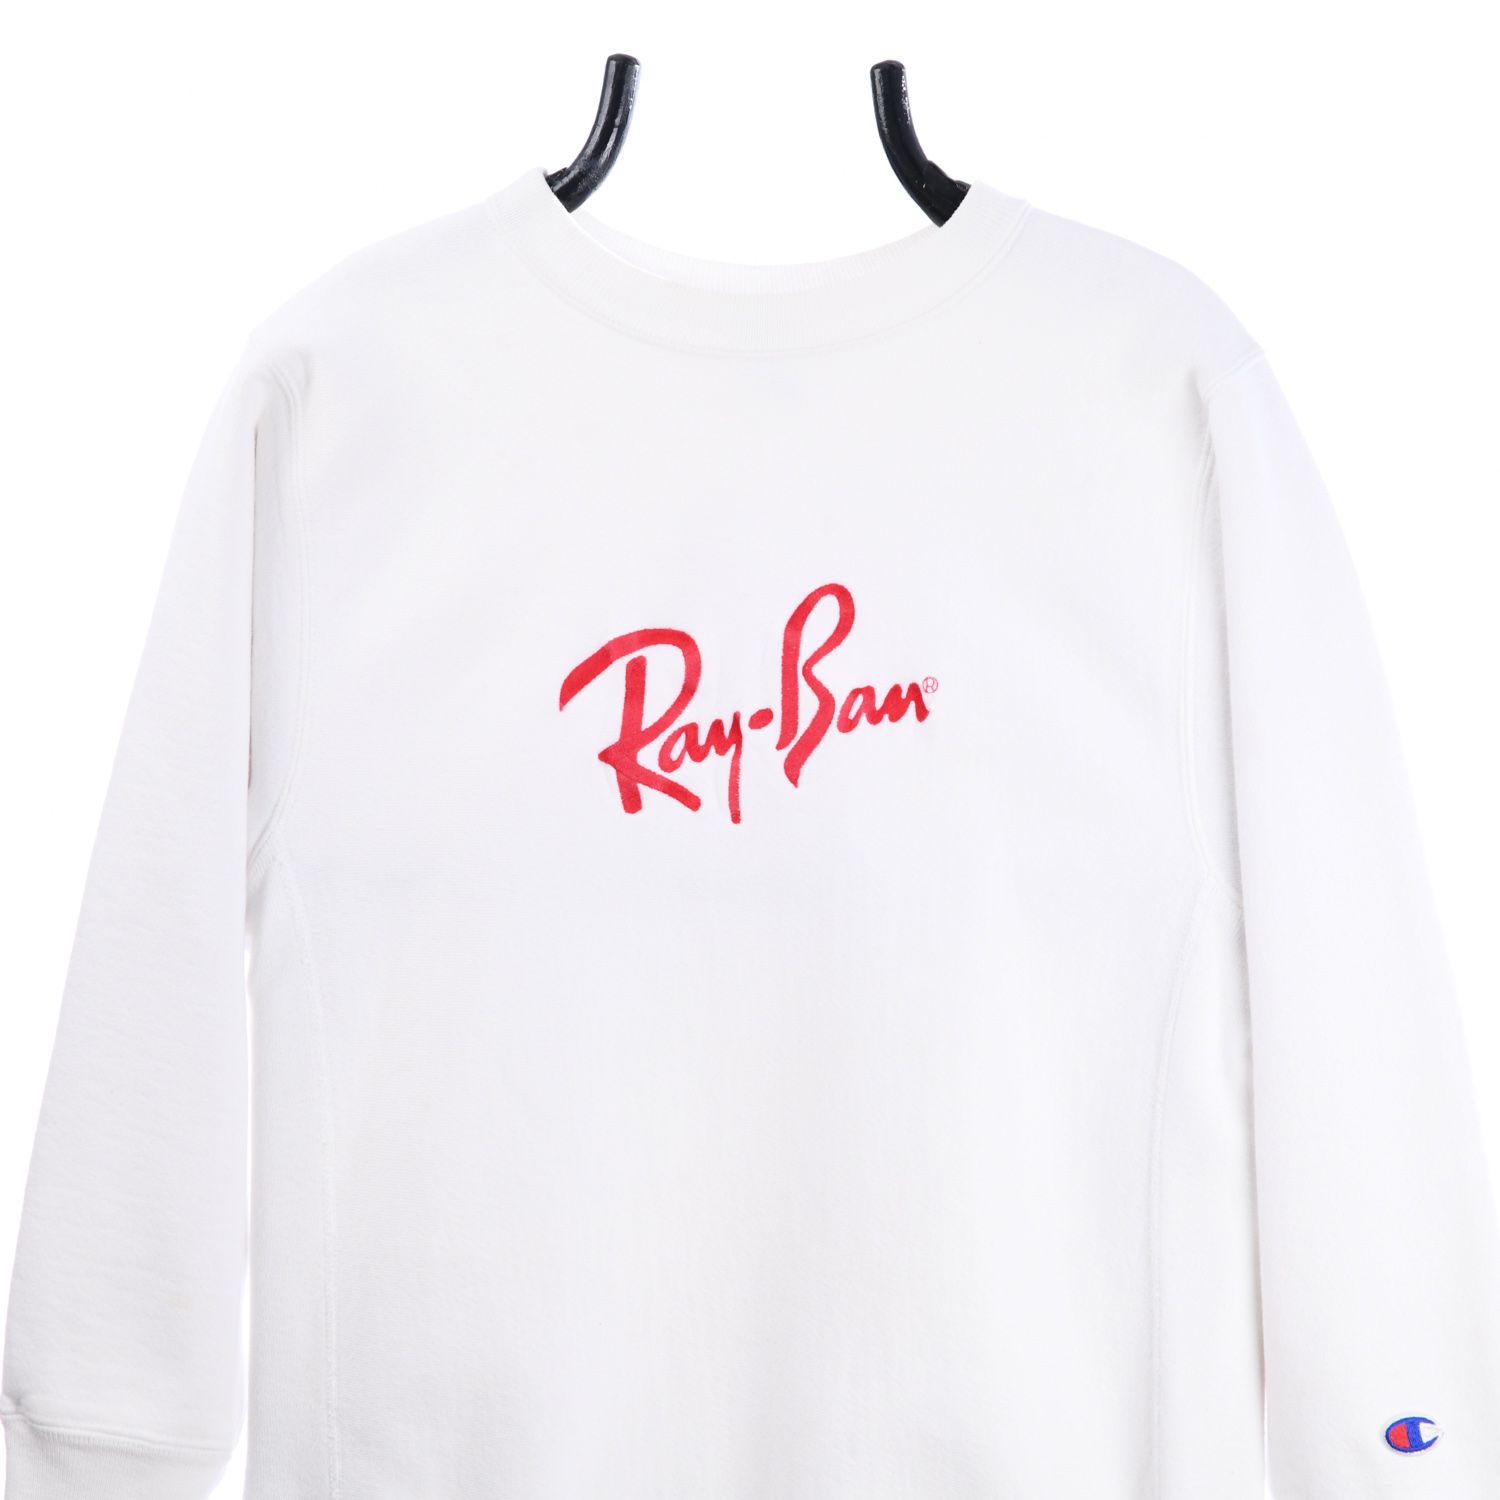 Ray Ban X Champion 1990s Reverse Weave Sweatshirt